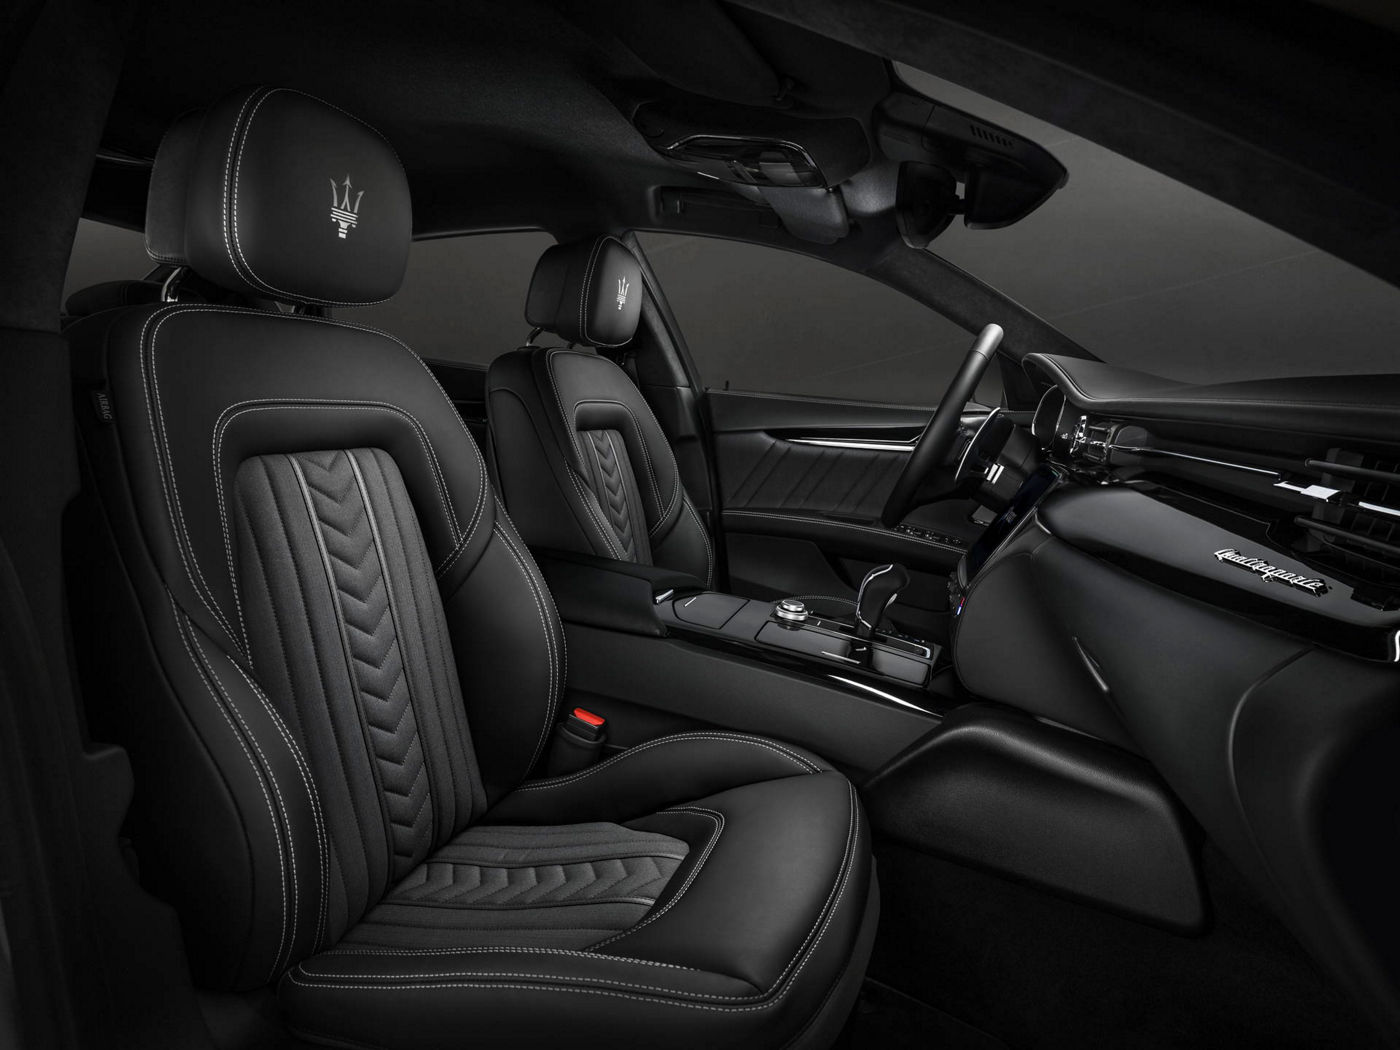 Seats black leather design details - Maserati Quattroporte GranLusso